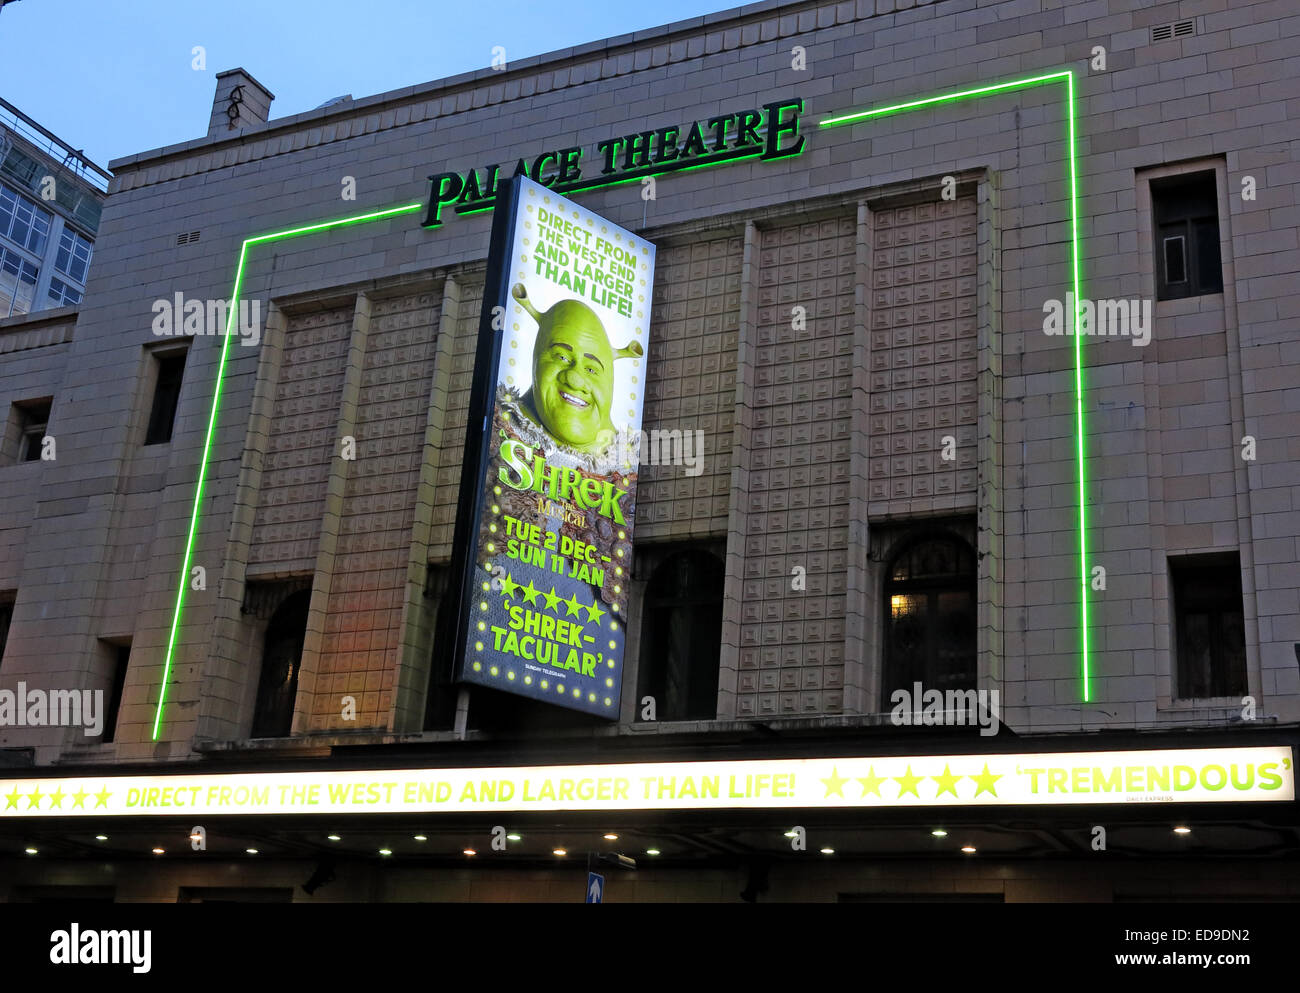 Shrek at The palace theatre Oxford Rd Manchester at dusk - Shrek-Tacular Stock Photo